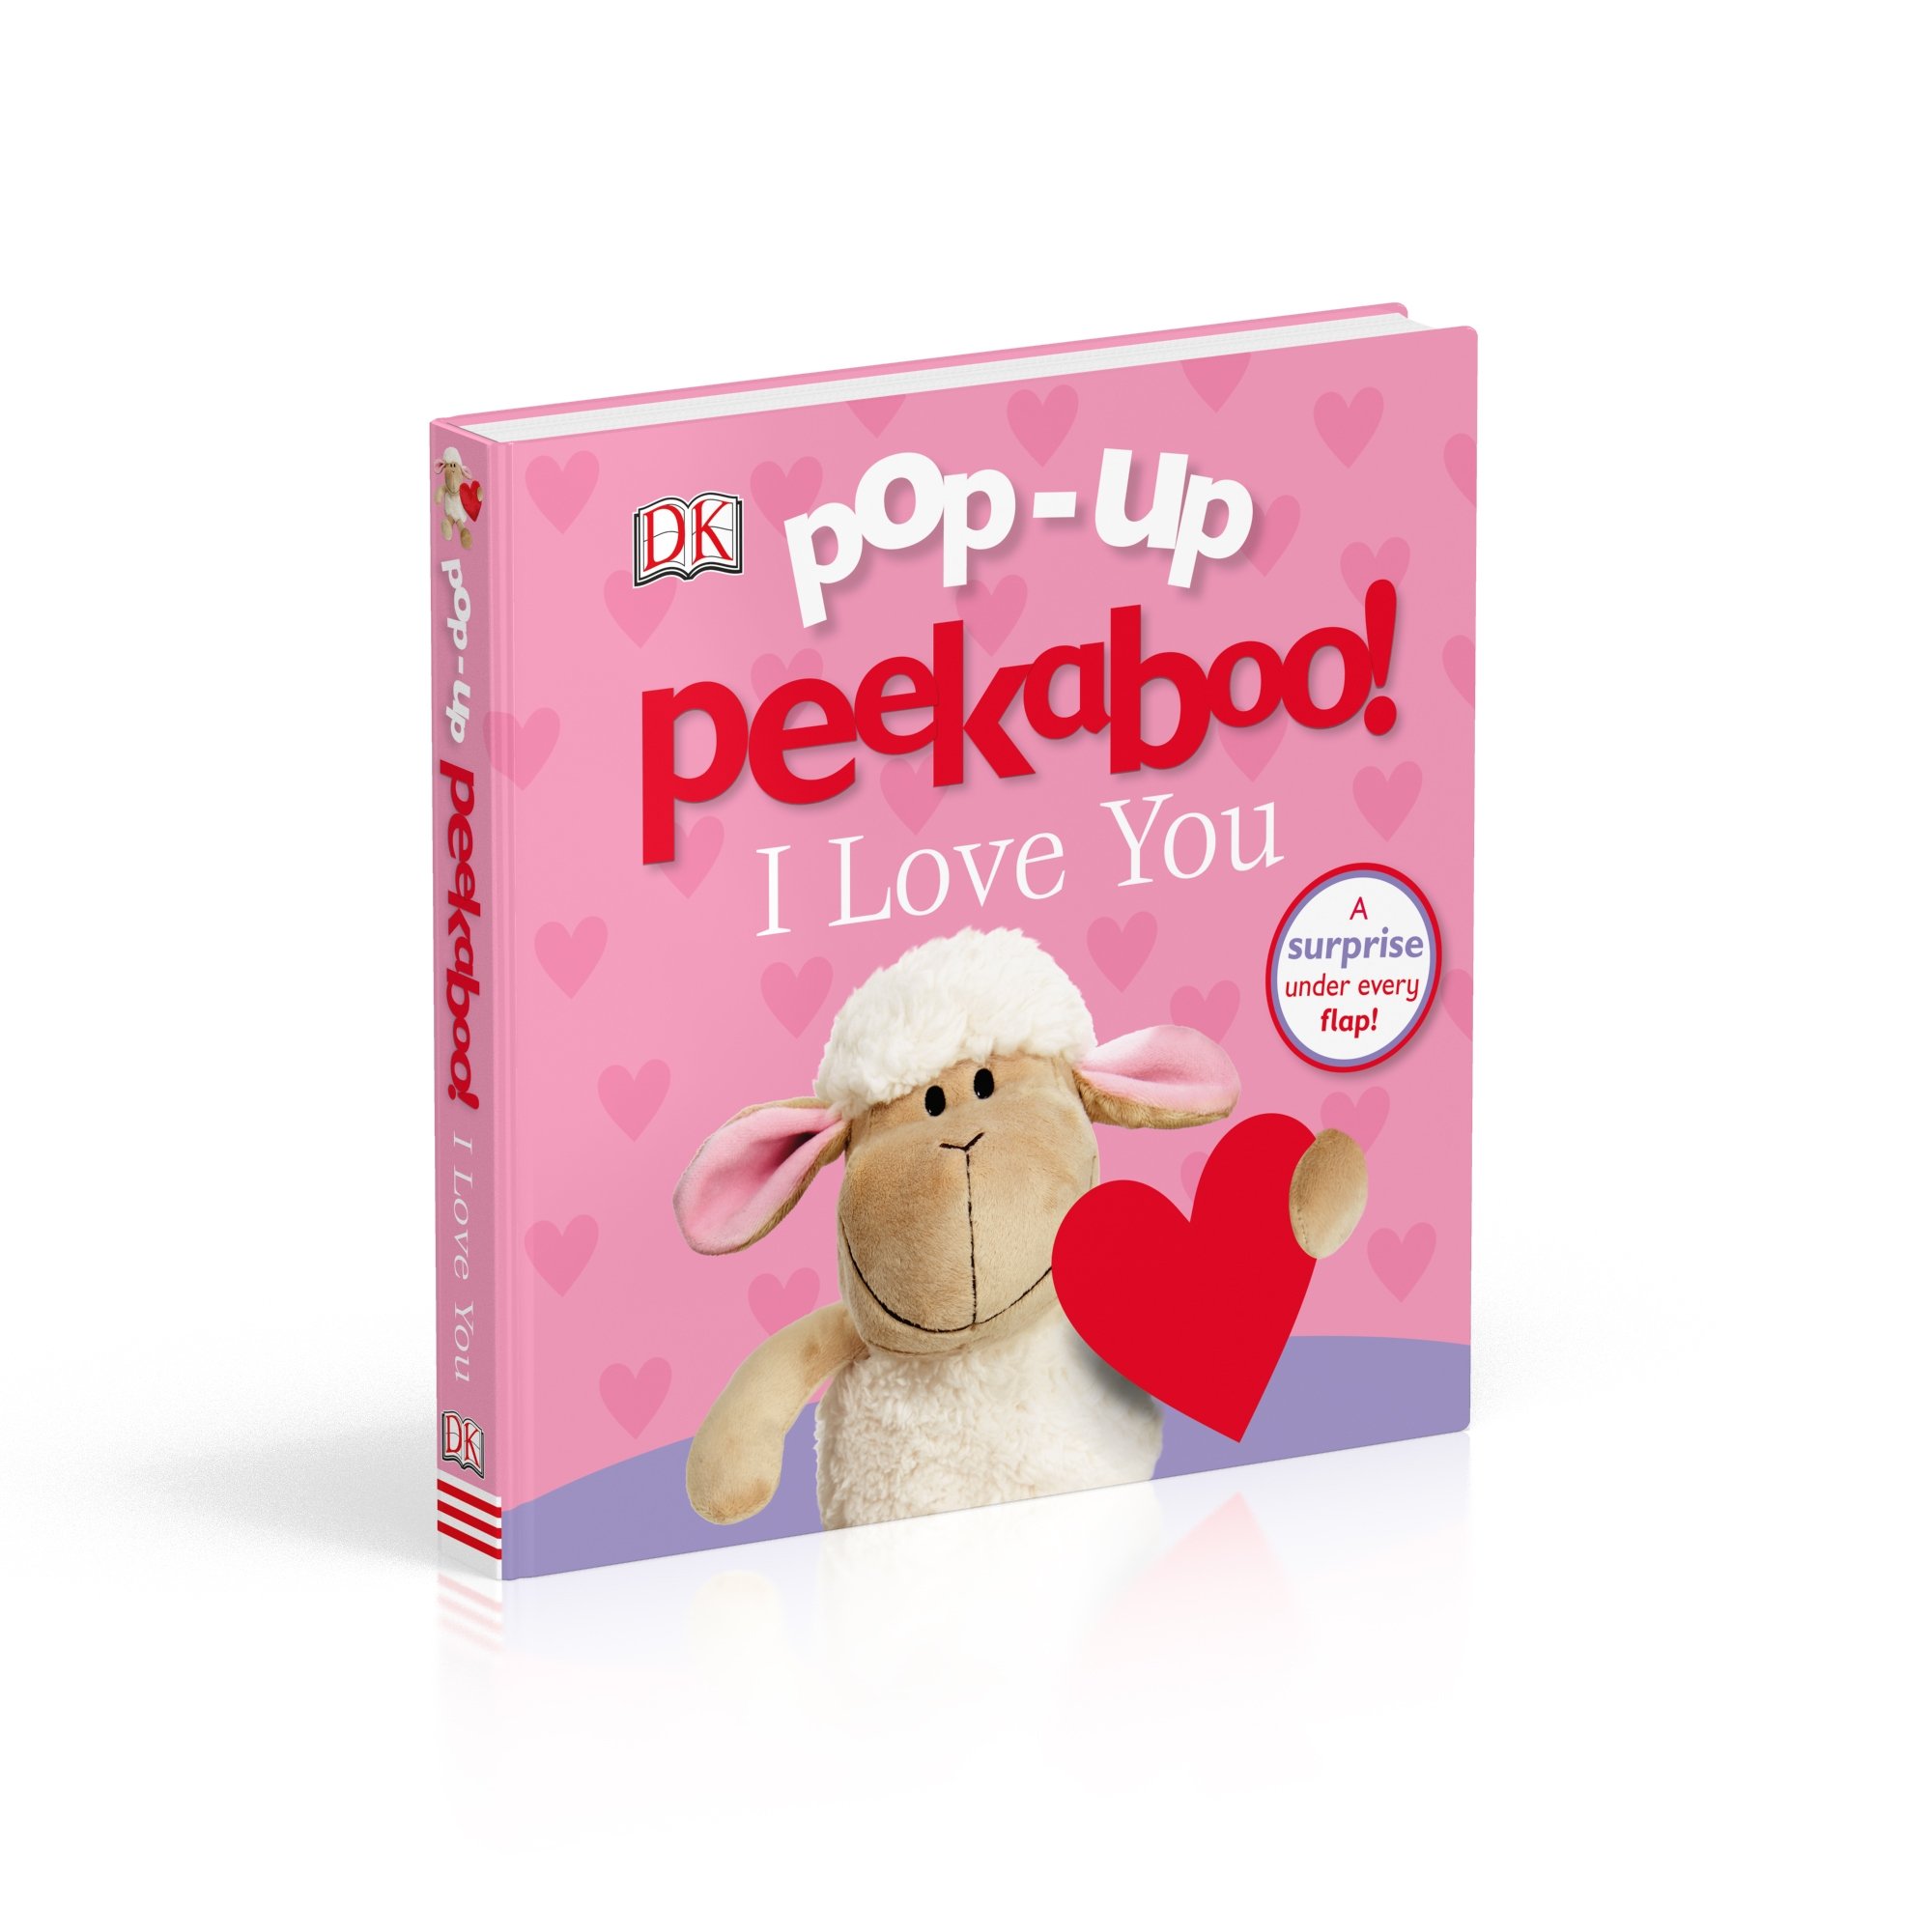 Pop-up Peekaboo! I Love You